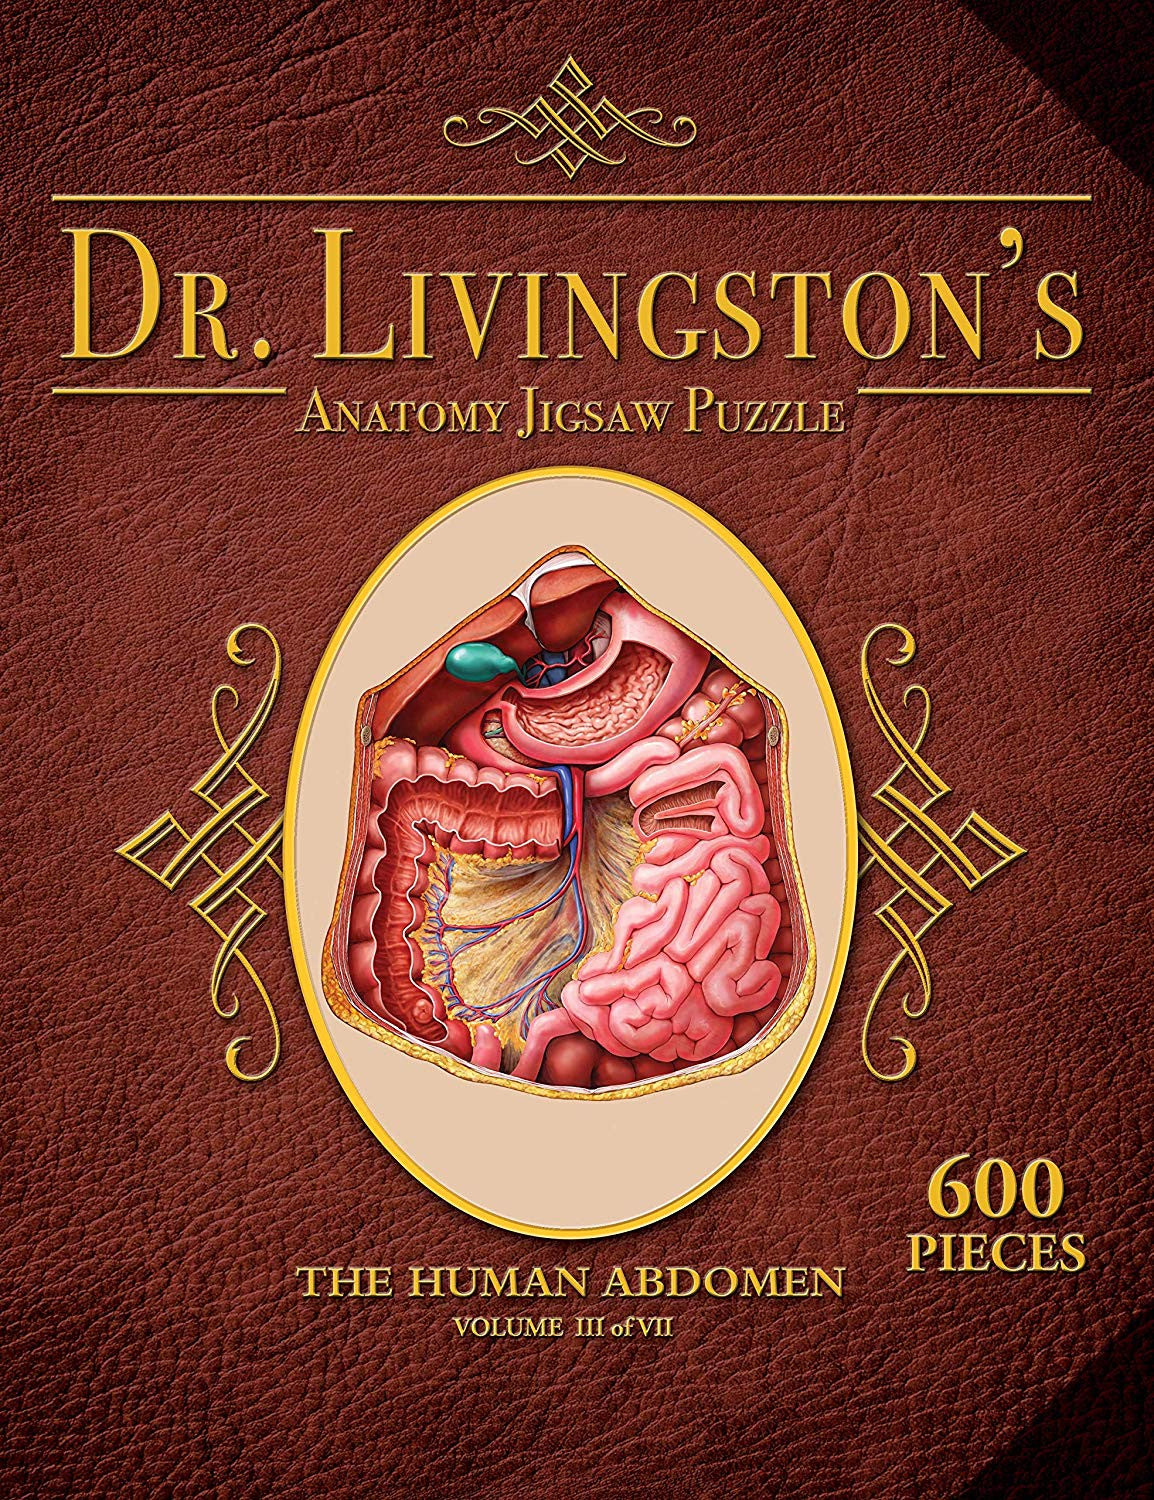 Dr. Livingston's Anatomy the Human Abdomen Puzzle 600 pieces